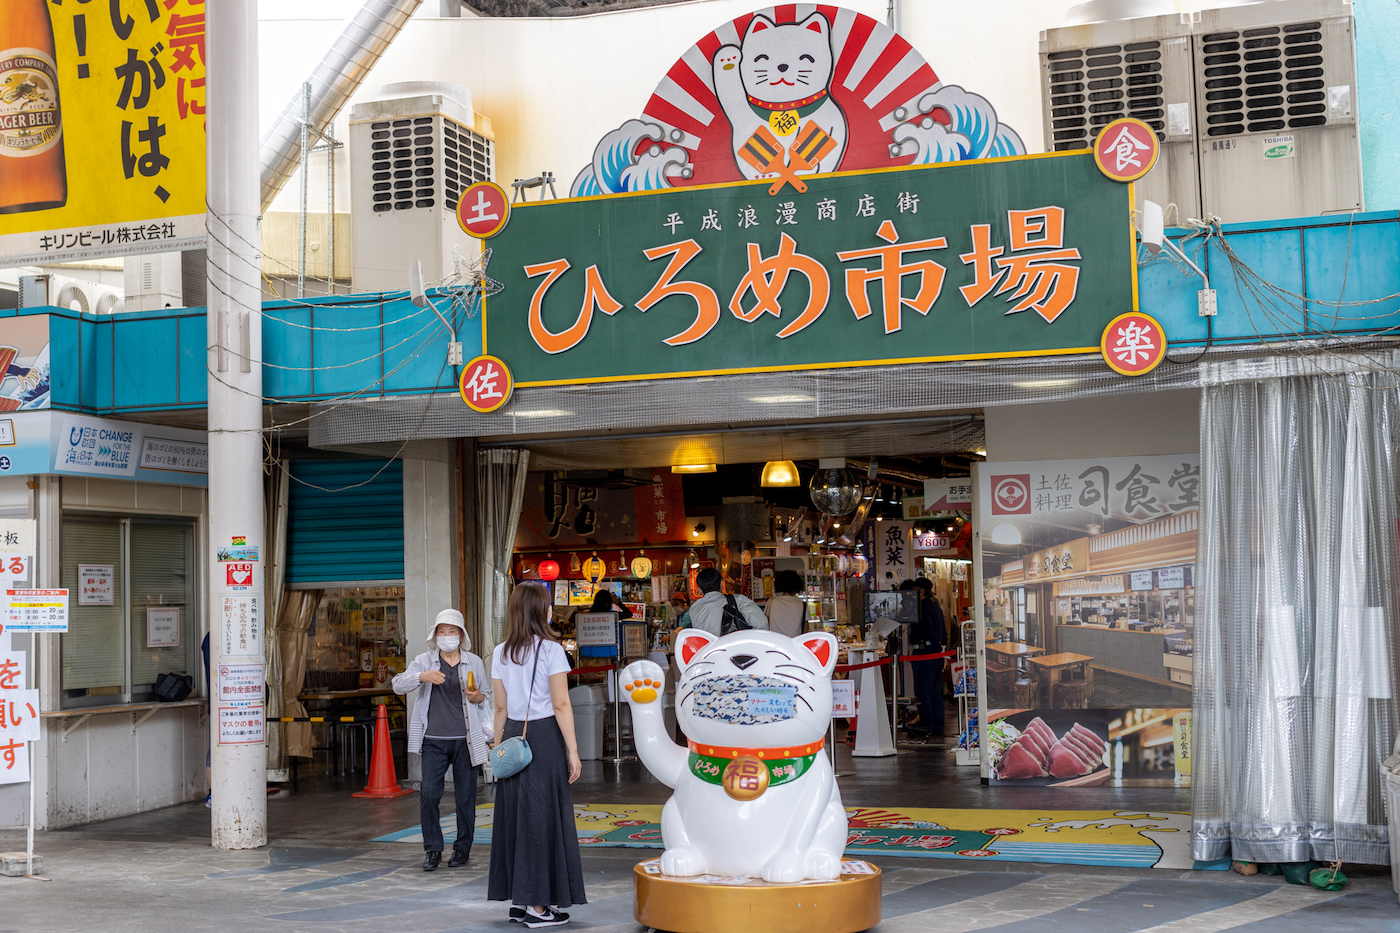 Hirome Market in Kochi Japan